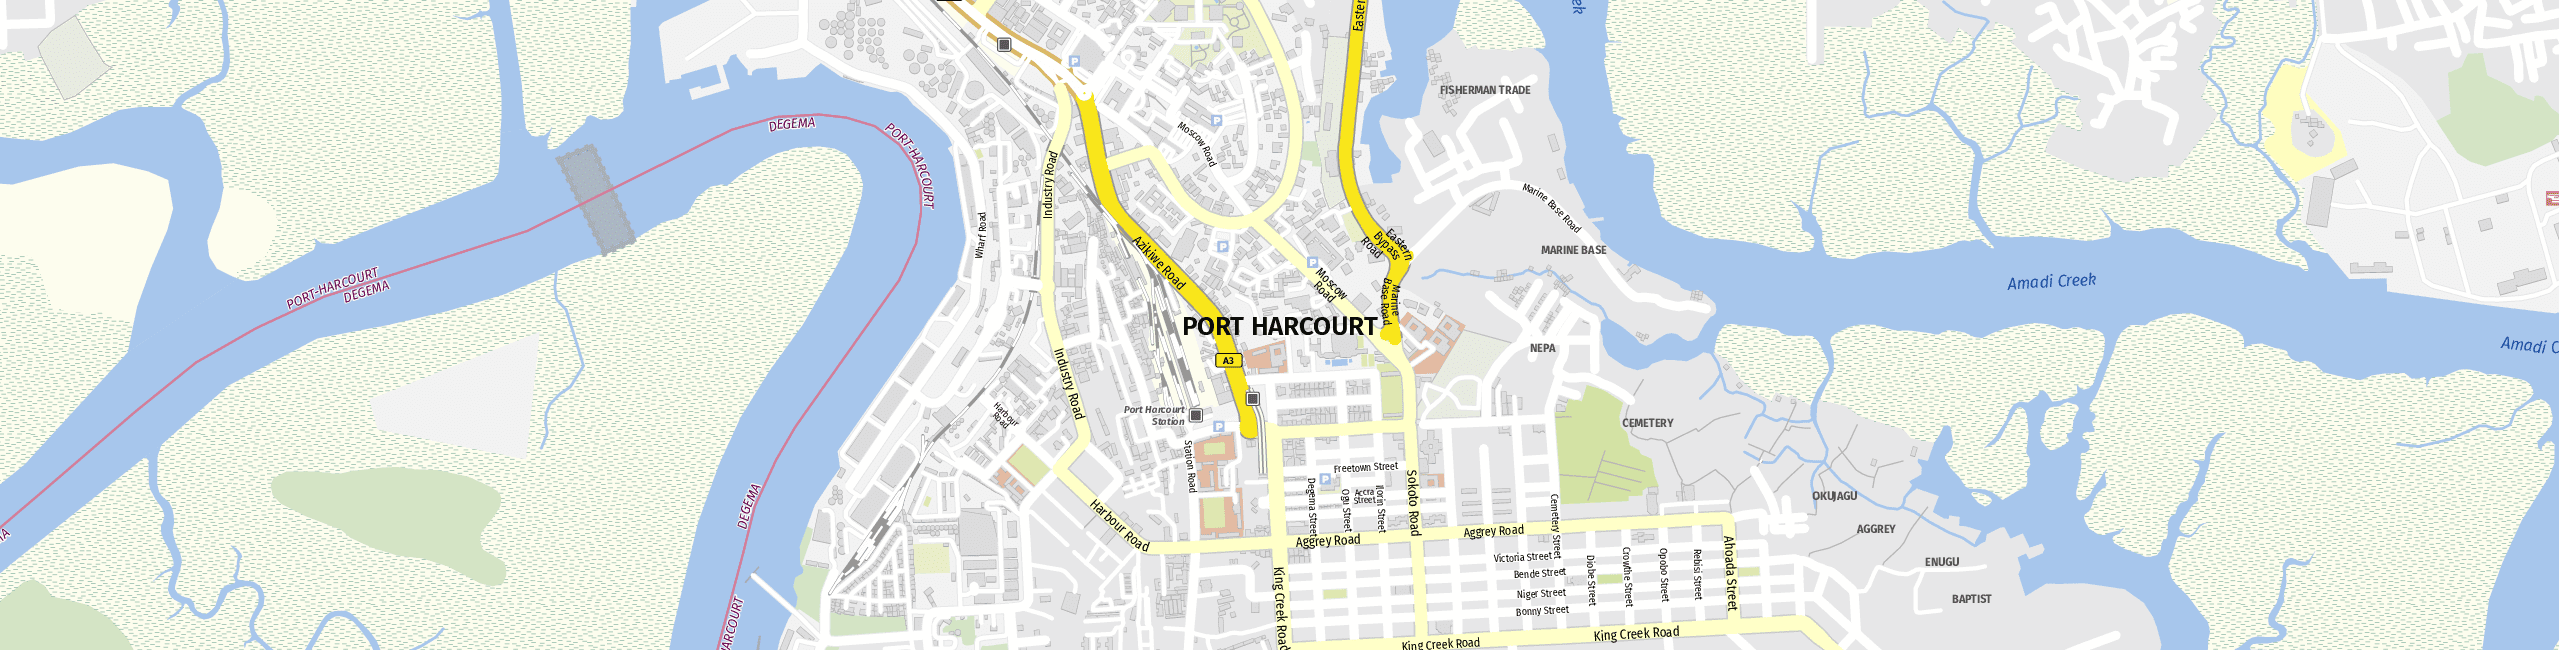 Stadtplan Port Harcourt zum Downloaden.